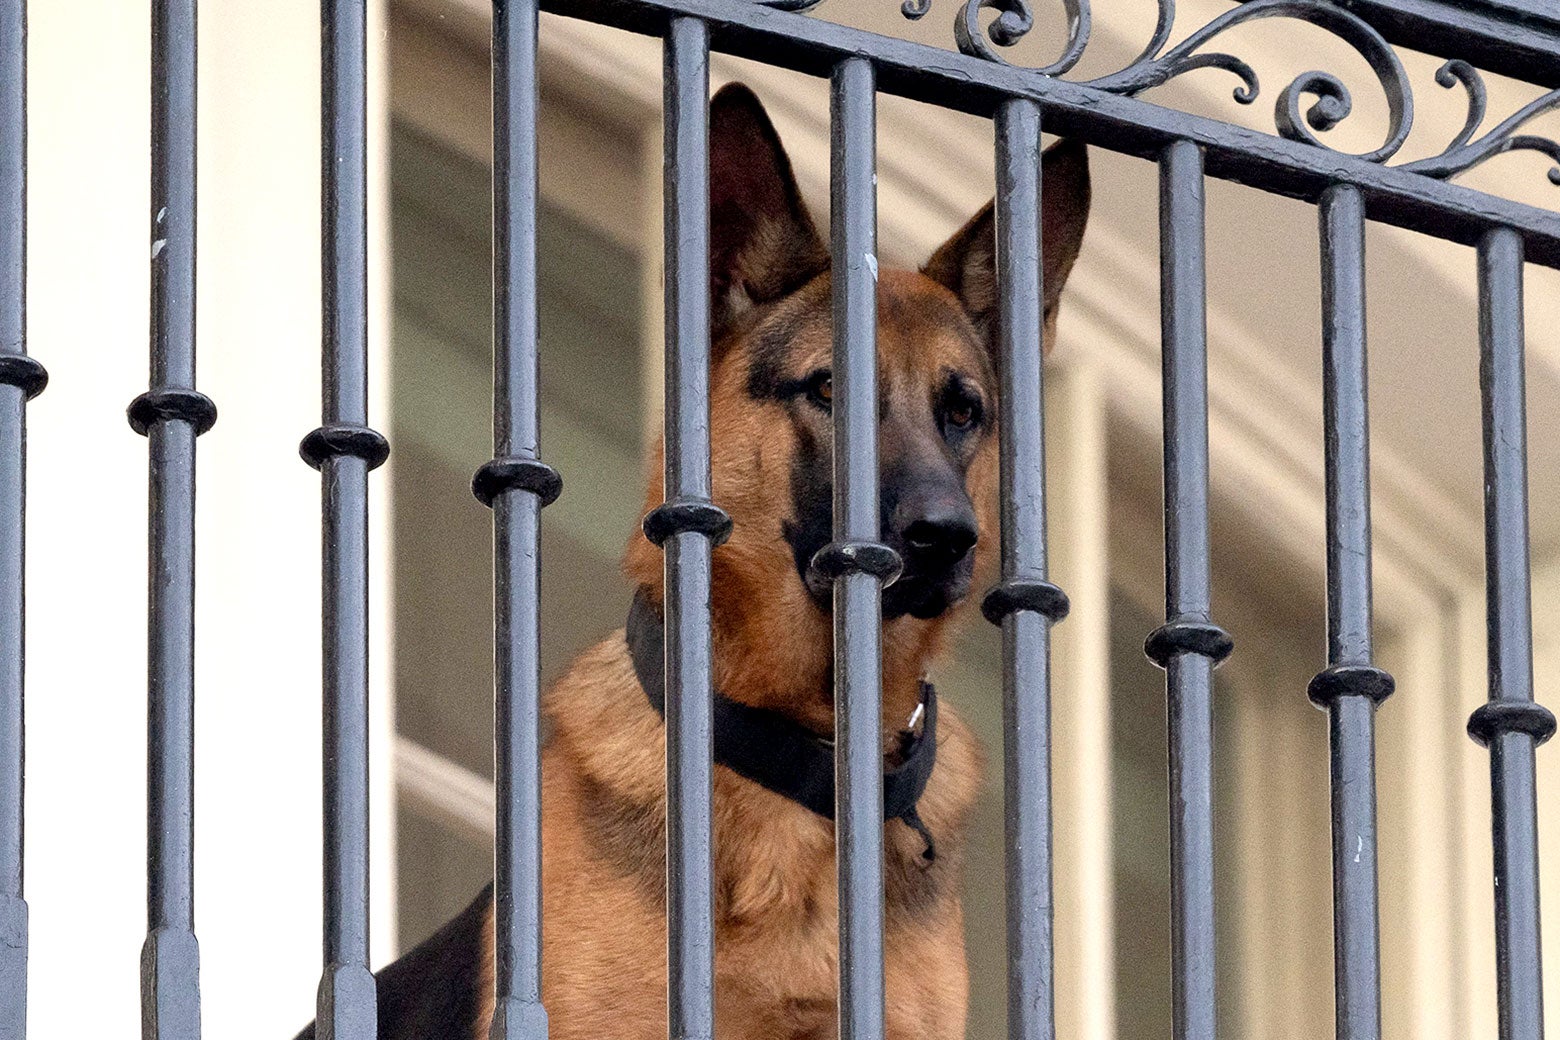 Joe Biden's German shepherd dog at the White House. 